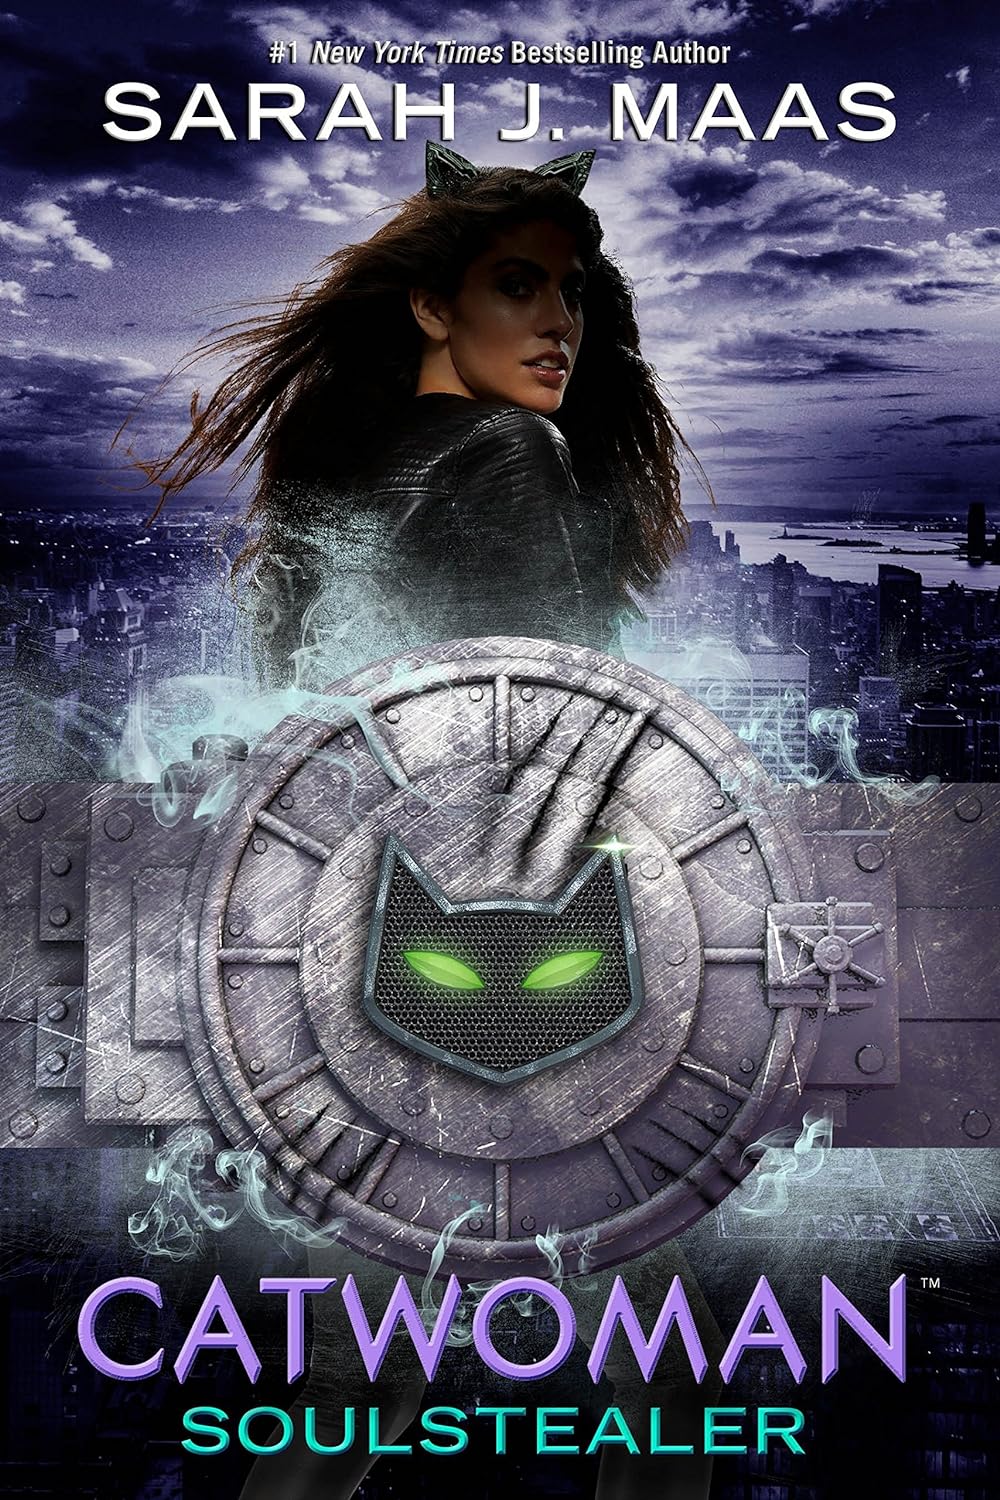 Catwoman Soulstealer Hardcover Novel